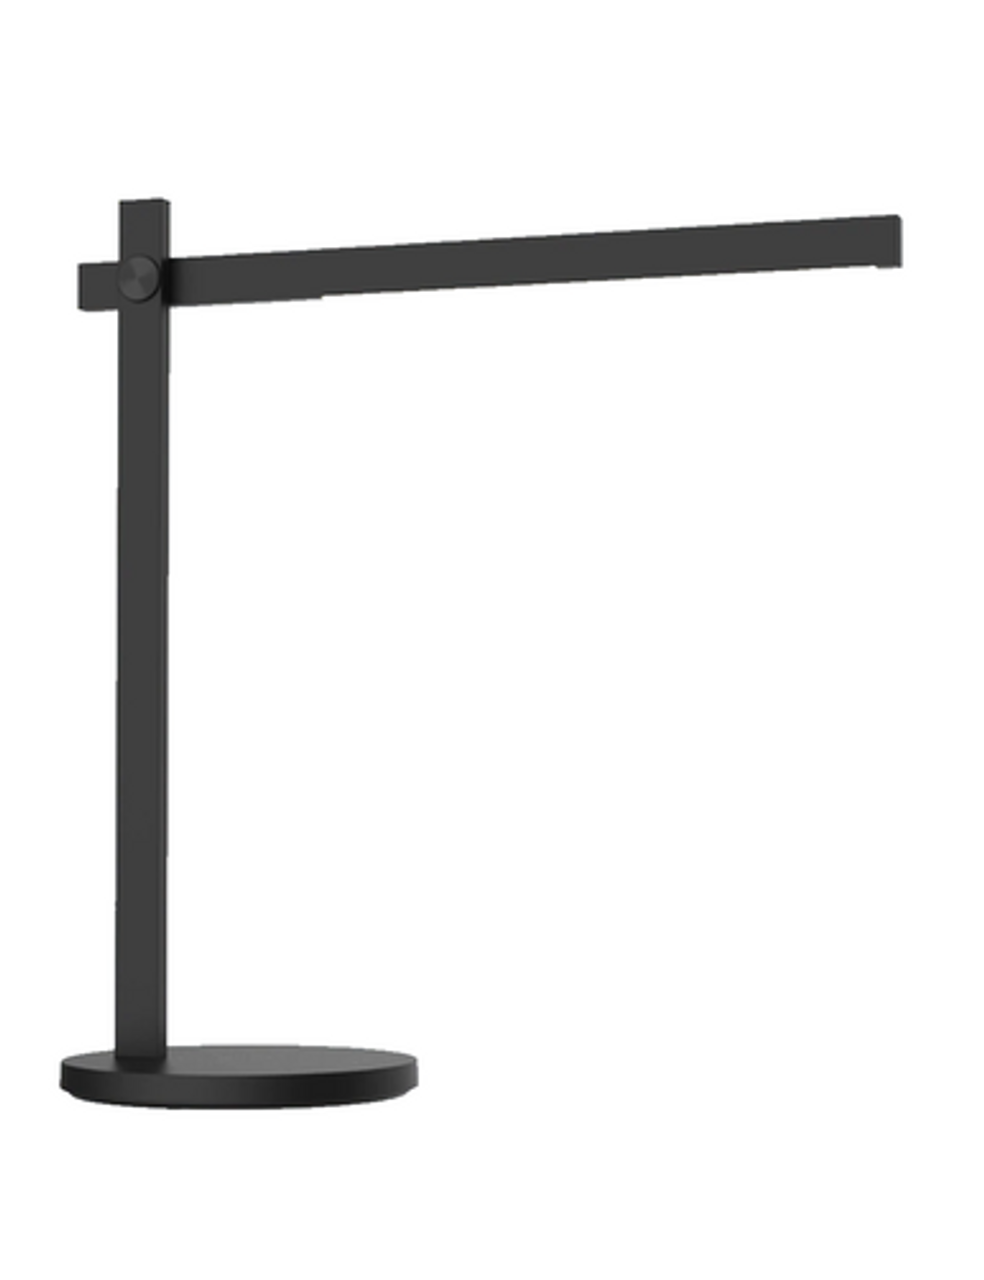 Black linear table lamp